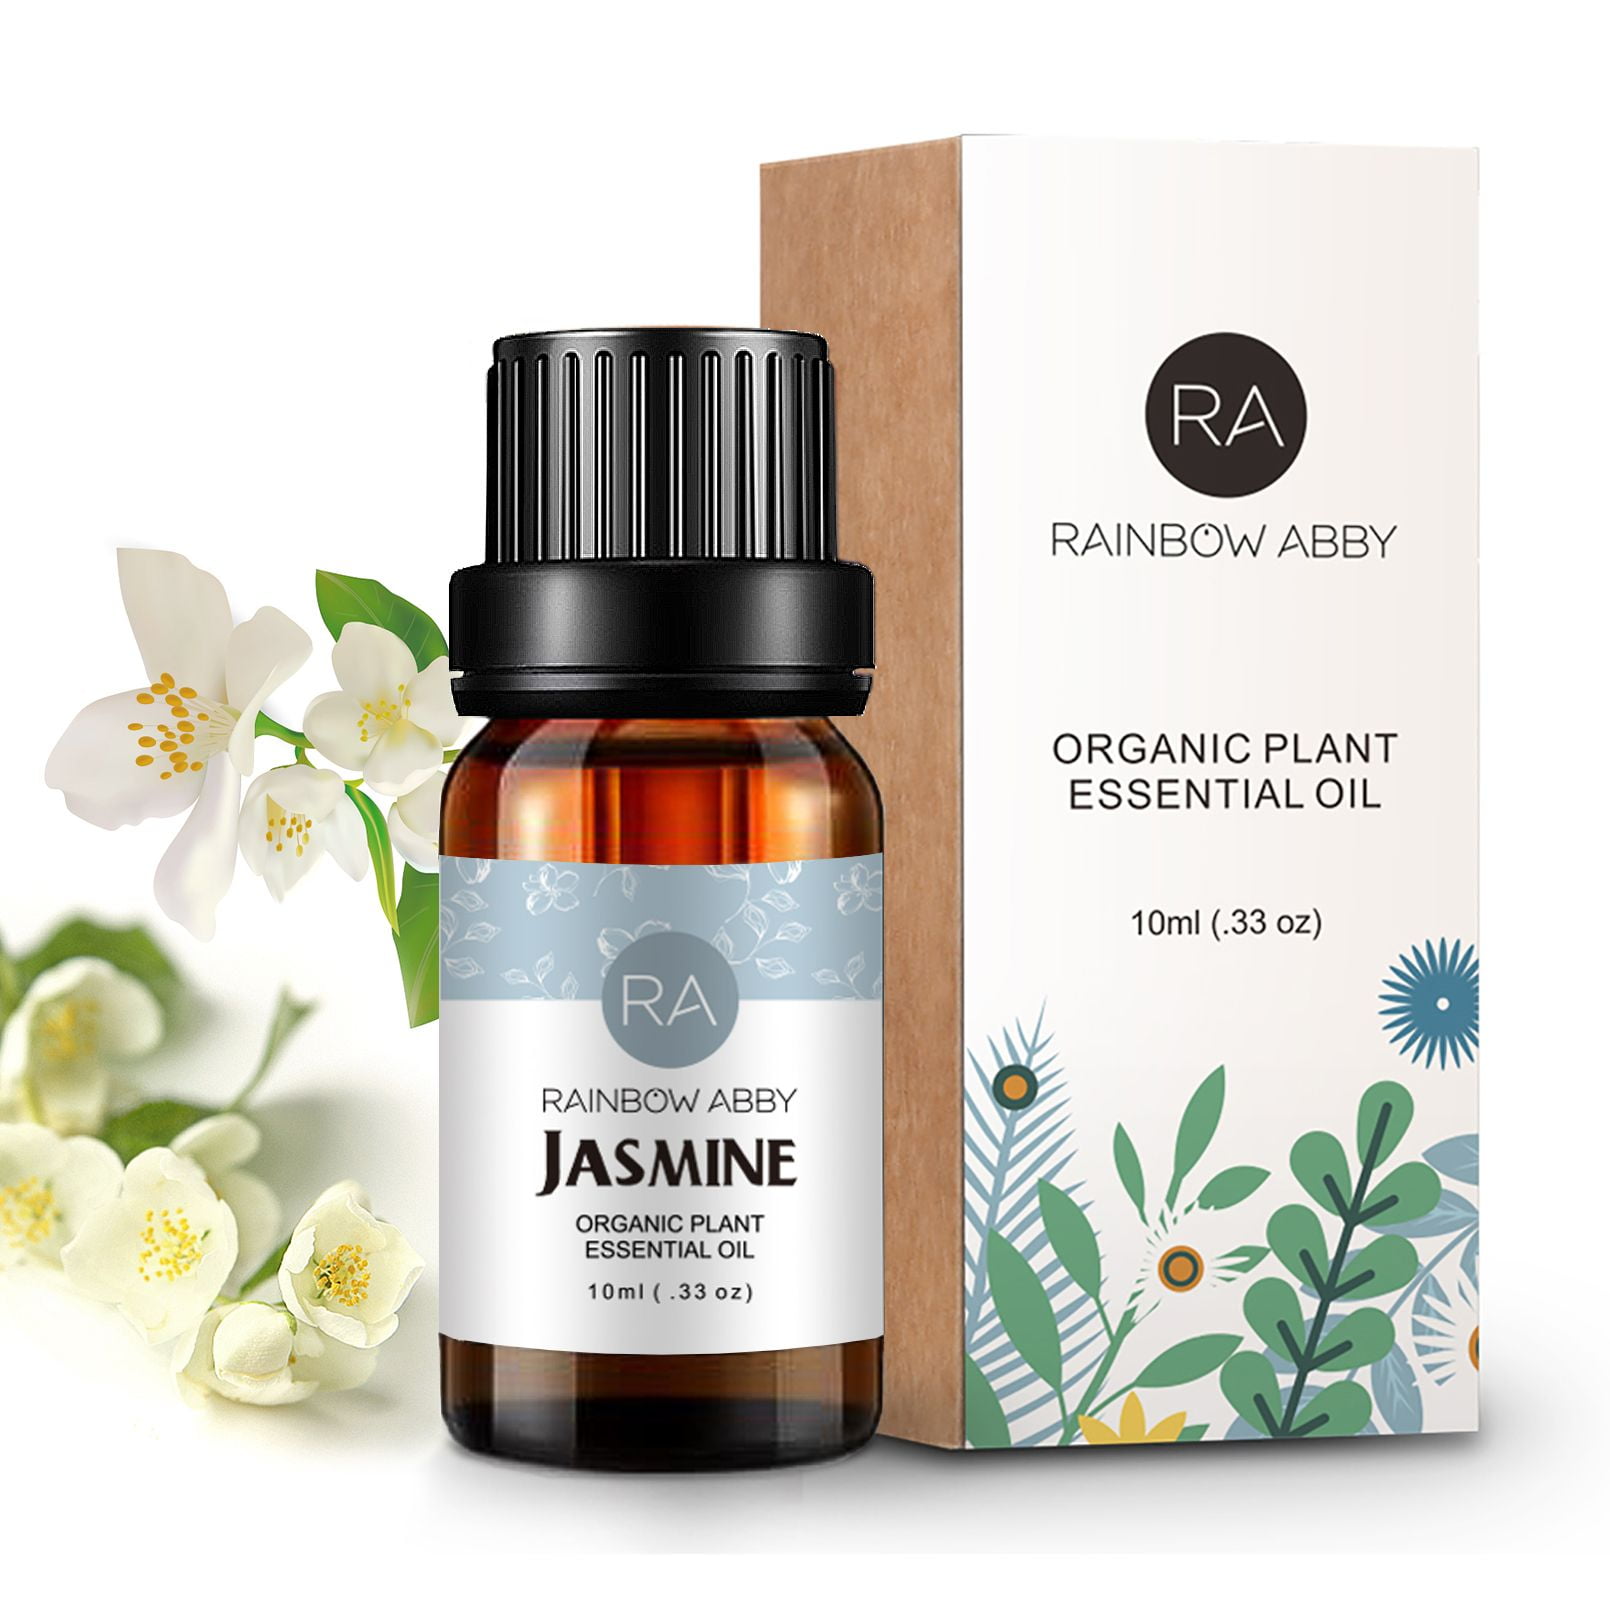 Fleura Jasmine Oil - Massage & Healing Oil